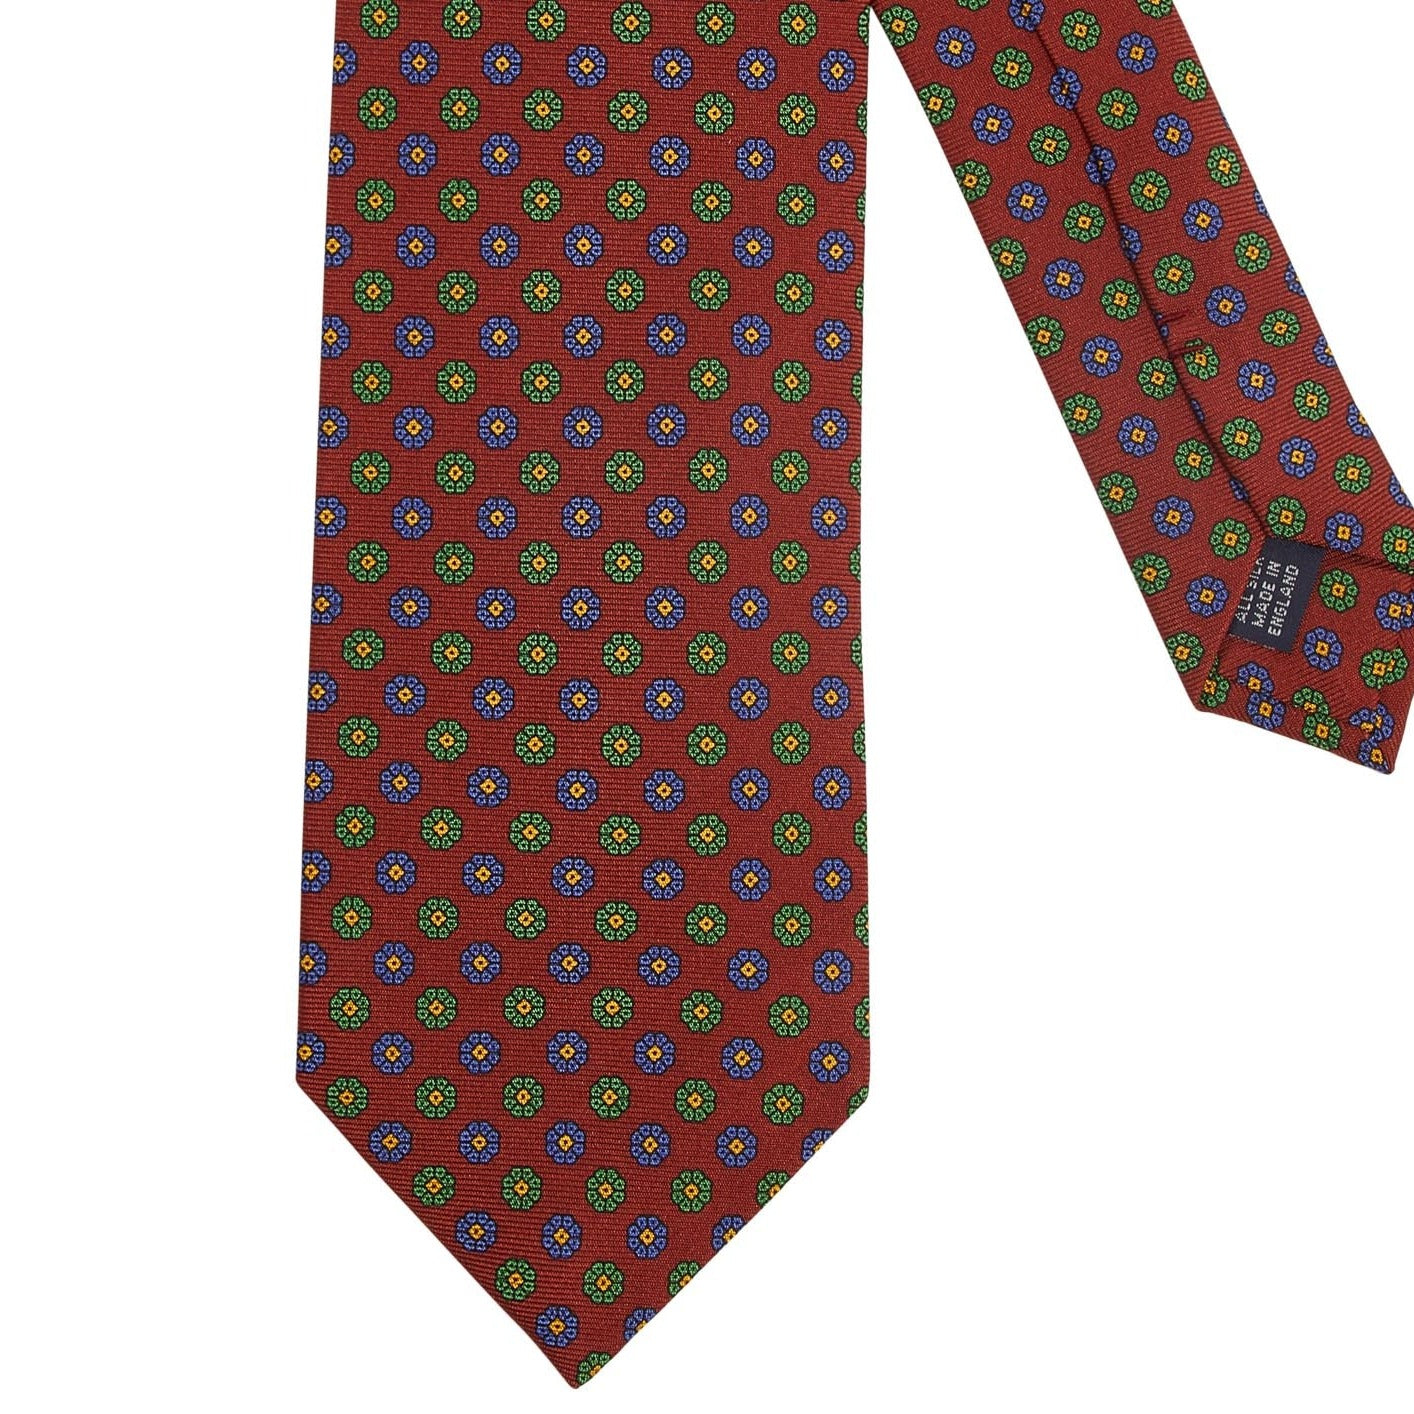 Sovereign Grade Navy Red Spot Printed Silk Tie, 160 cm | KirbyAllison.com